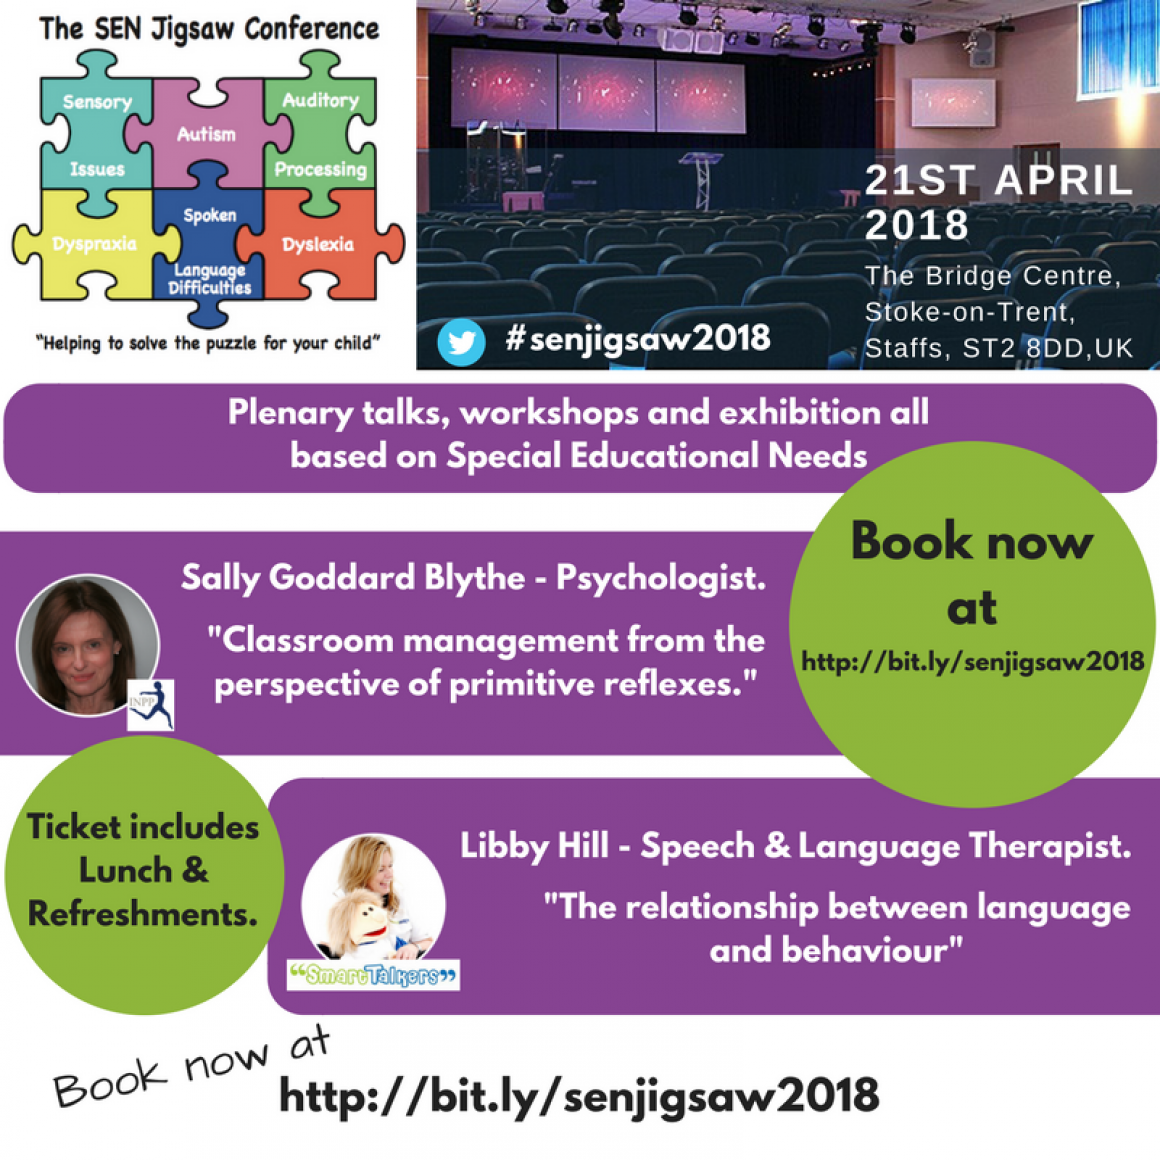 SEN Jigsaw Conference 2018